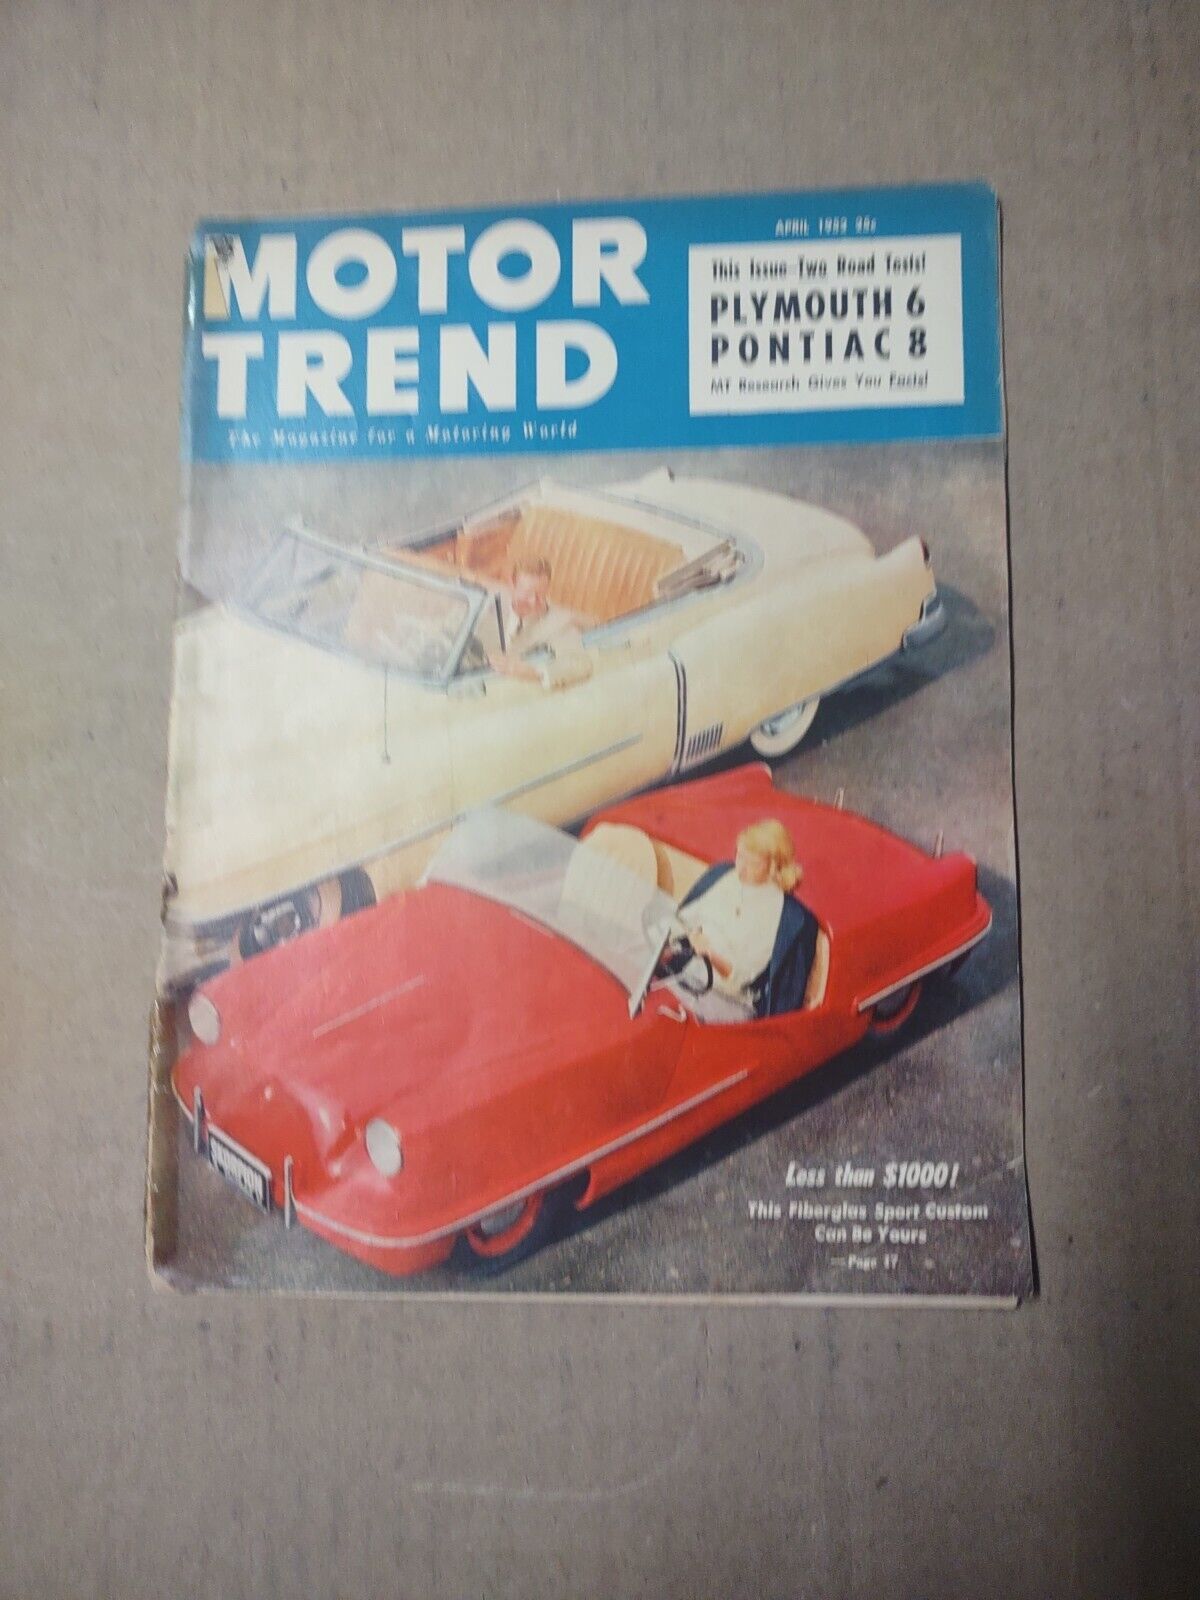 April 1952 Motor Trend Magazine  - Road Test Plymouth 6 Pontiac 8 Fiberglass Kit